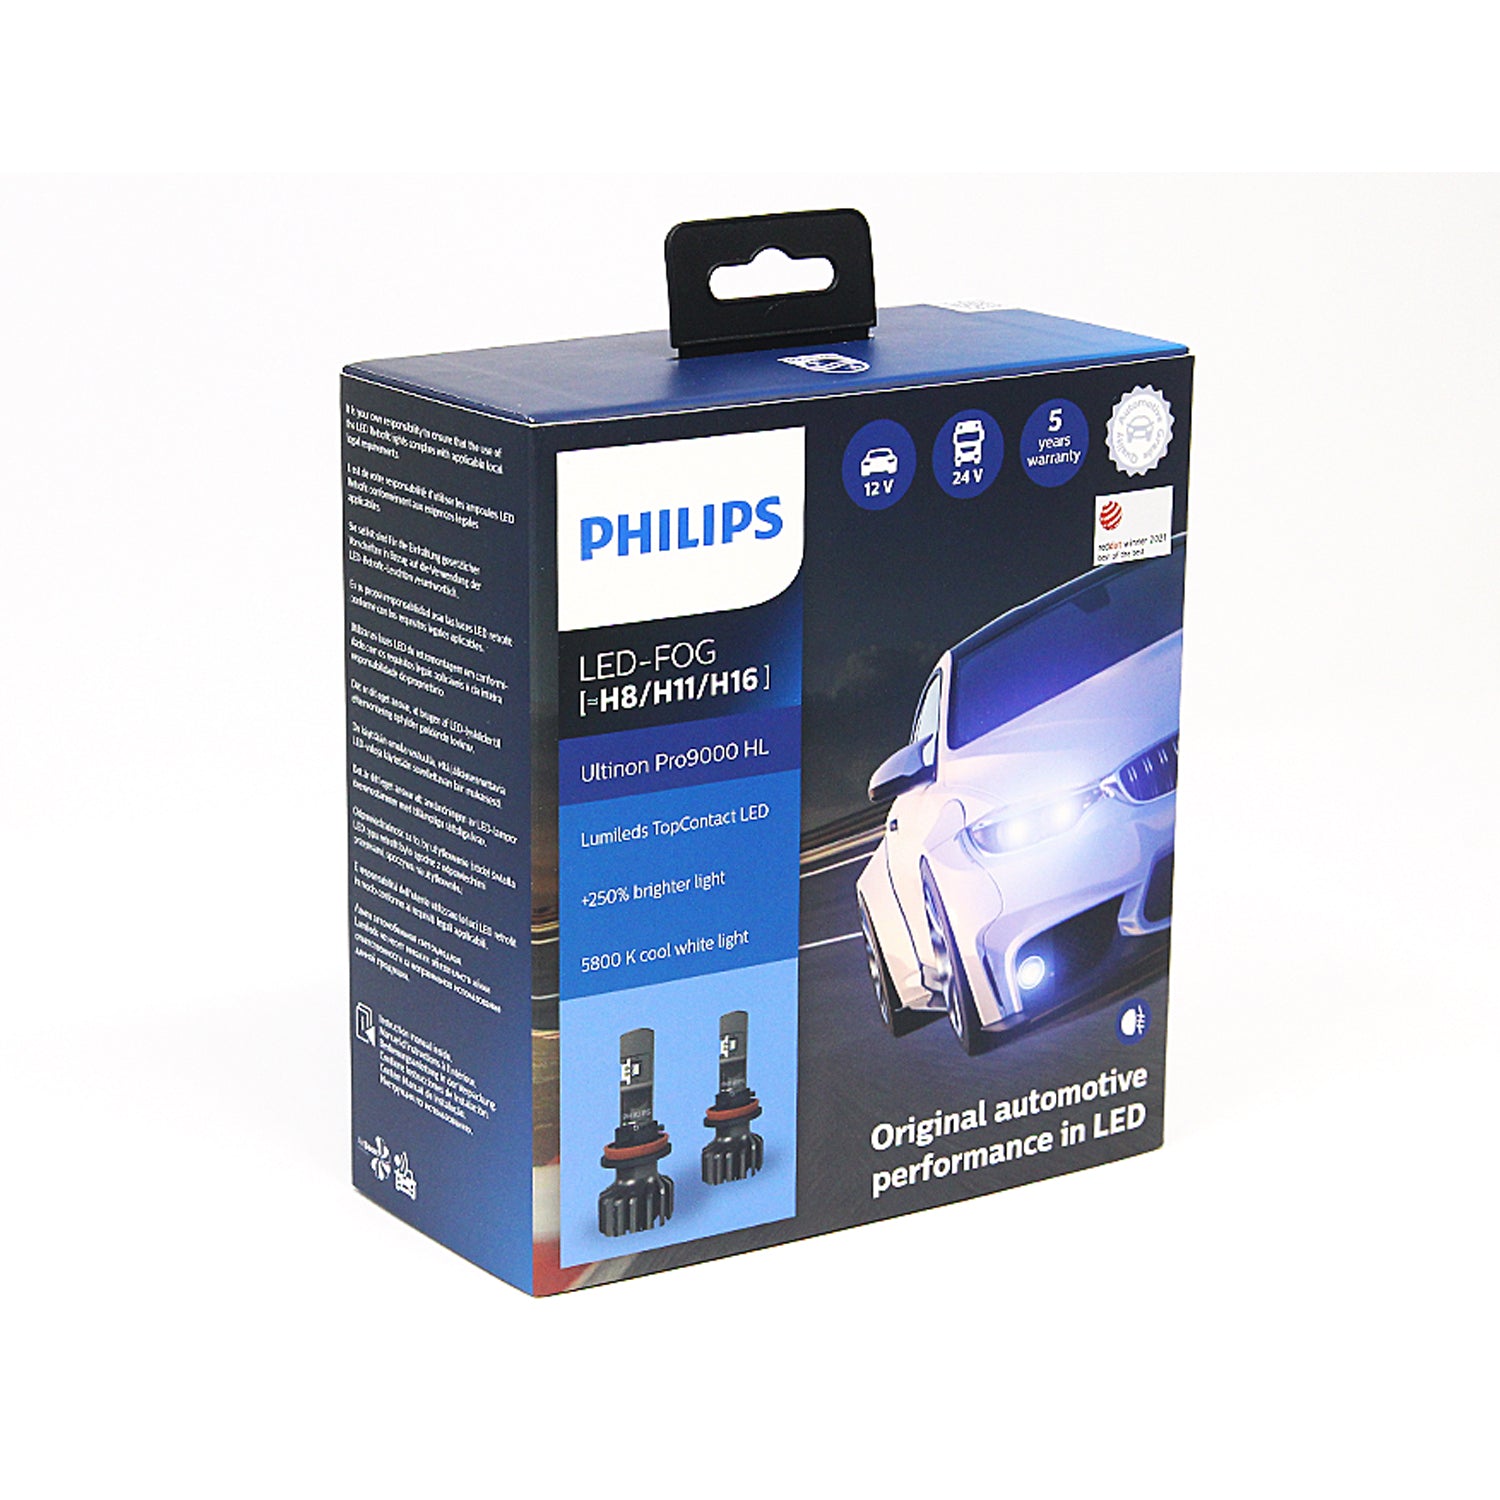 1x C10W 43mm LED Ultinon Pro6000 Warmweiß 4000K - Philips